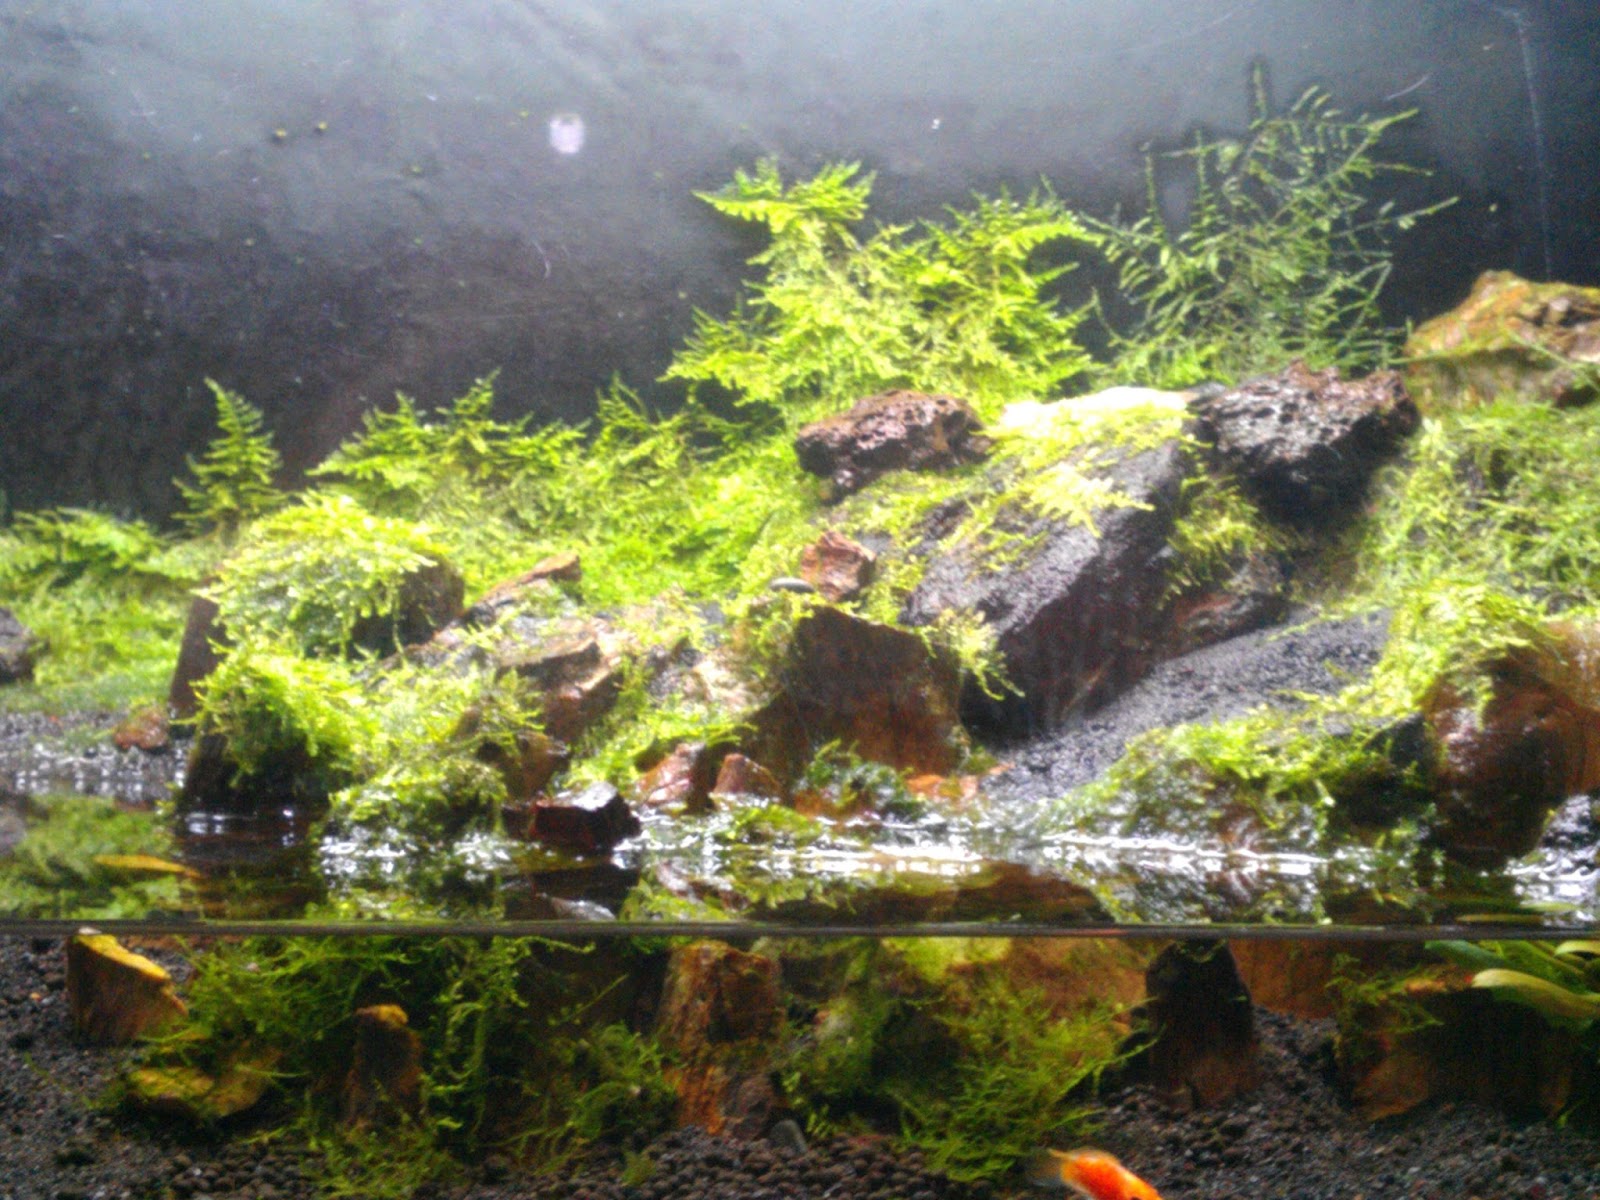 greenleaf splindid aquascape: Christmas n mini Christmas moss Moss On Rocks In Aquarium